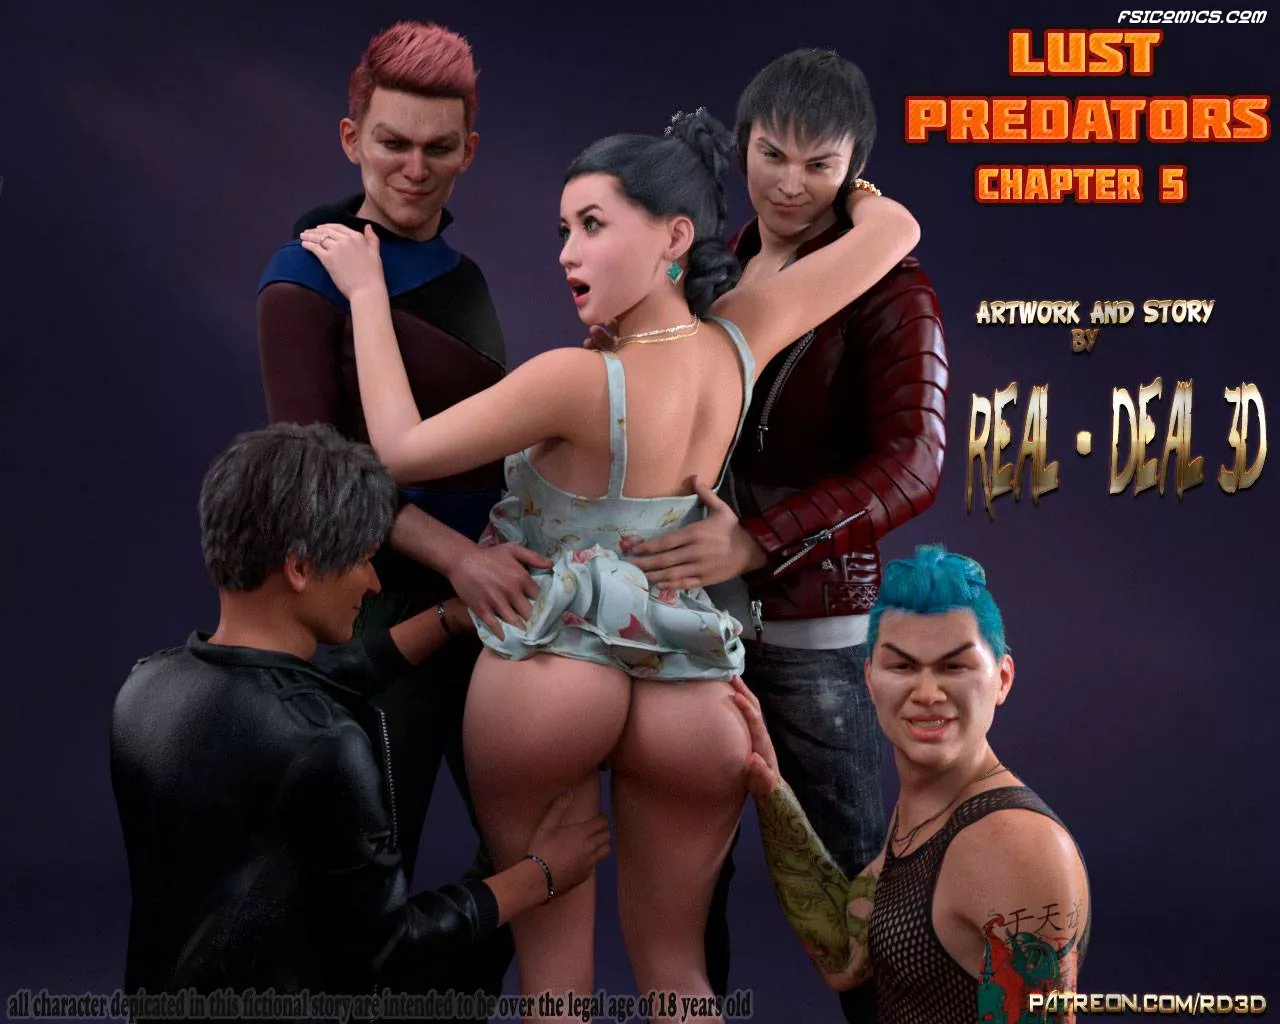 Lust Predators Chapter 5 - Real Deal 3D - 27 - FSIComics